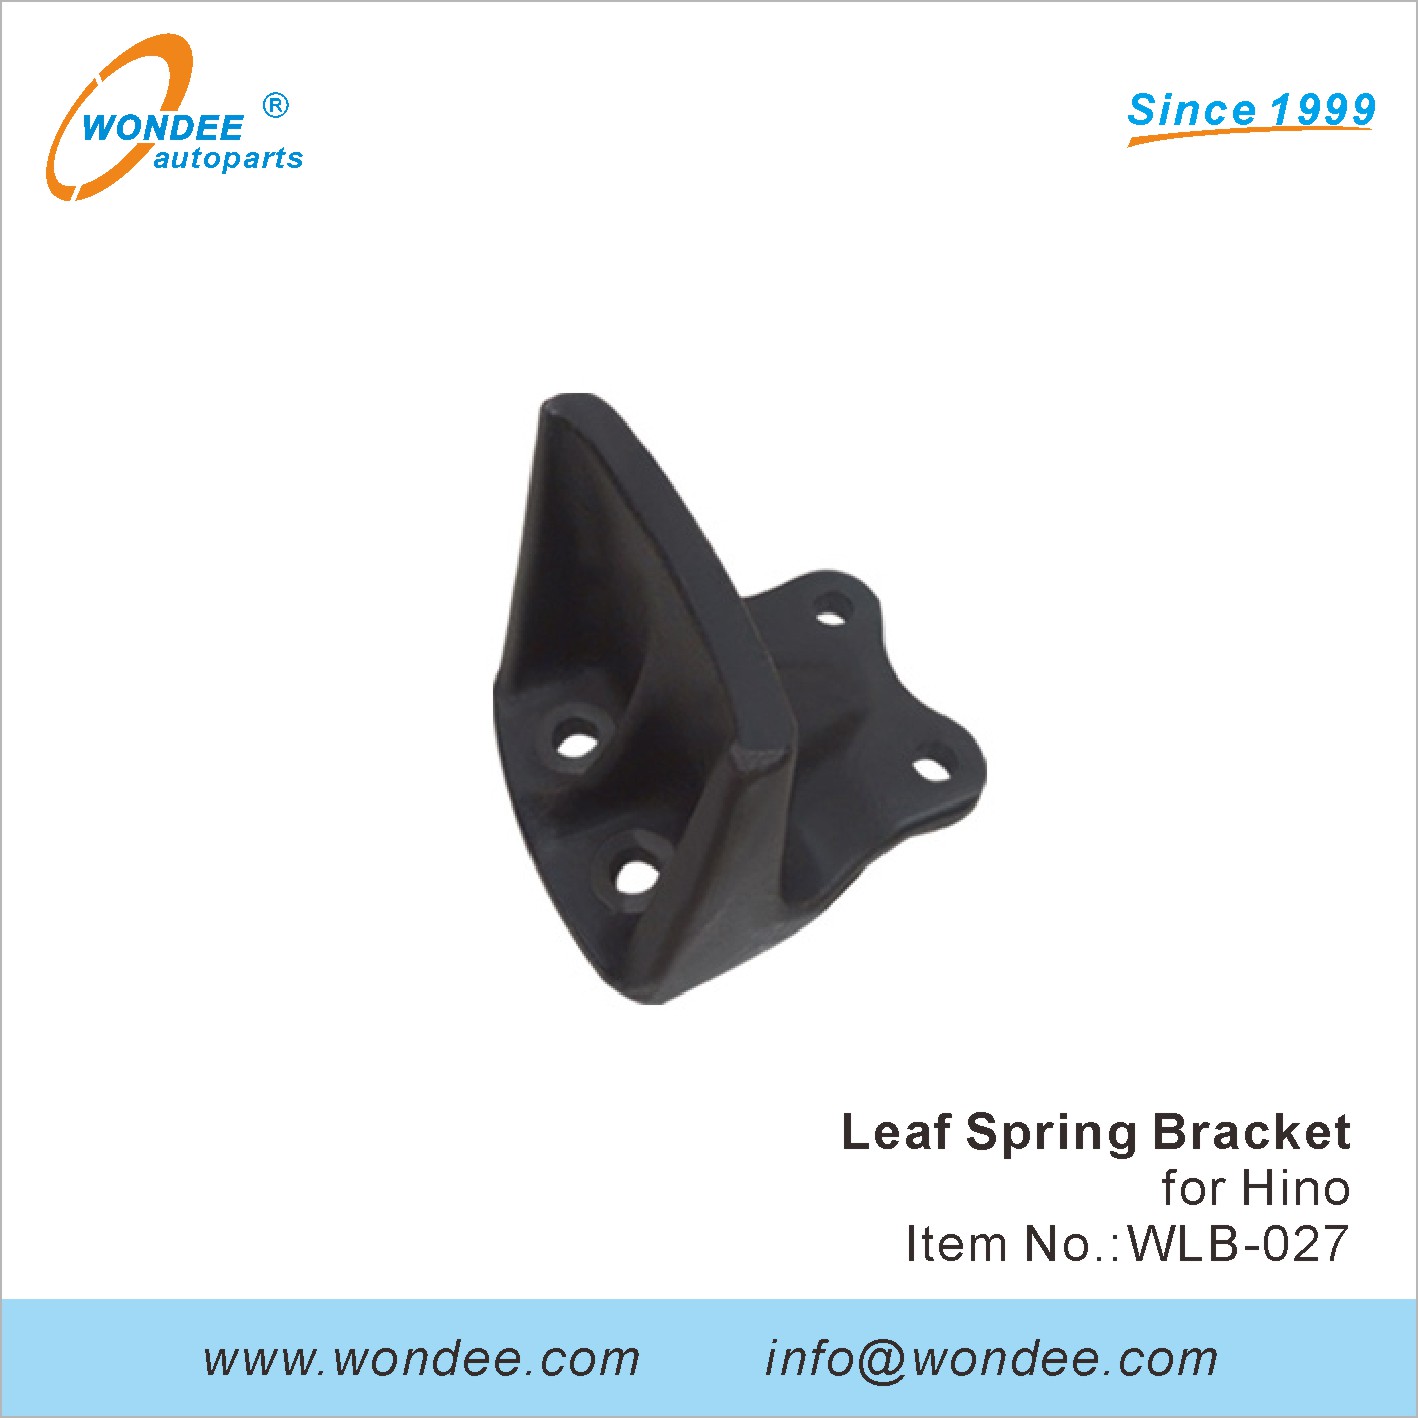 WONDEE leaf spring bracket (27)